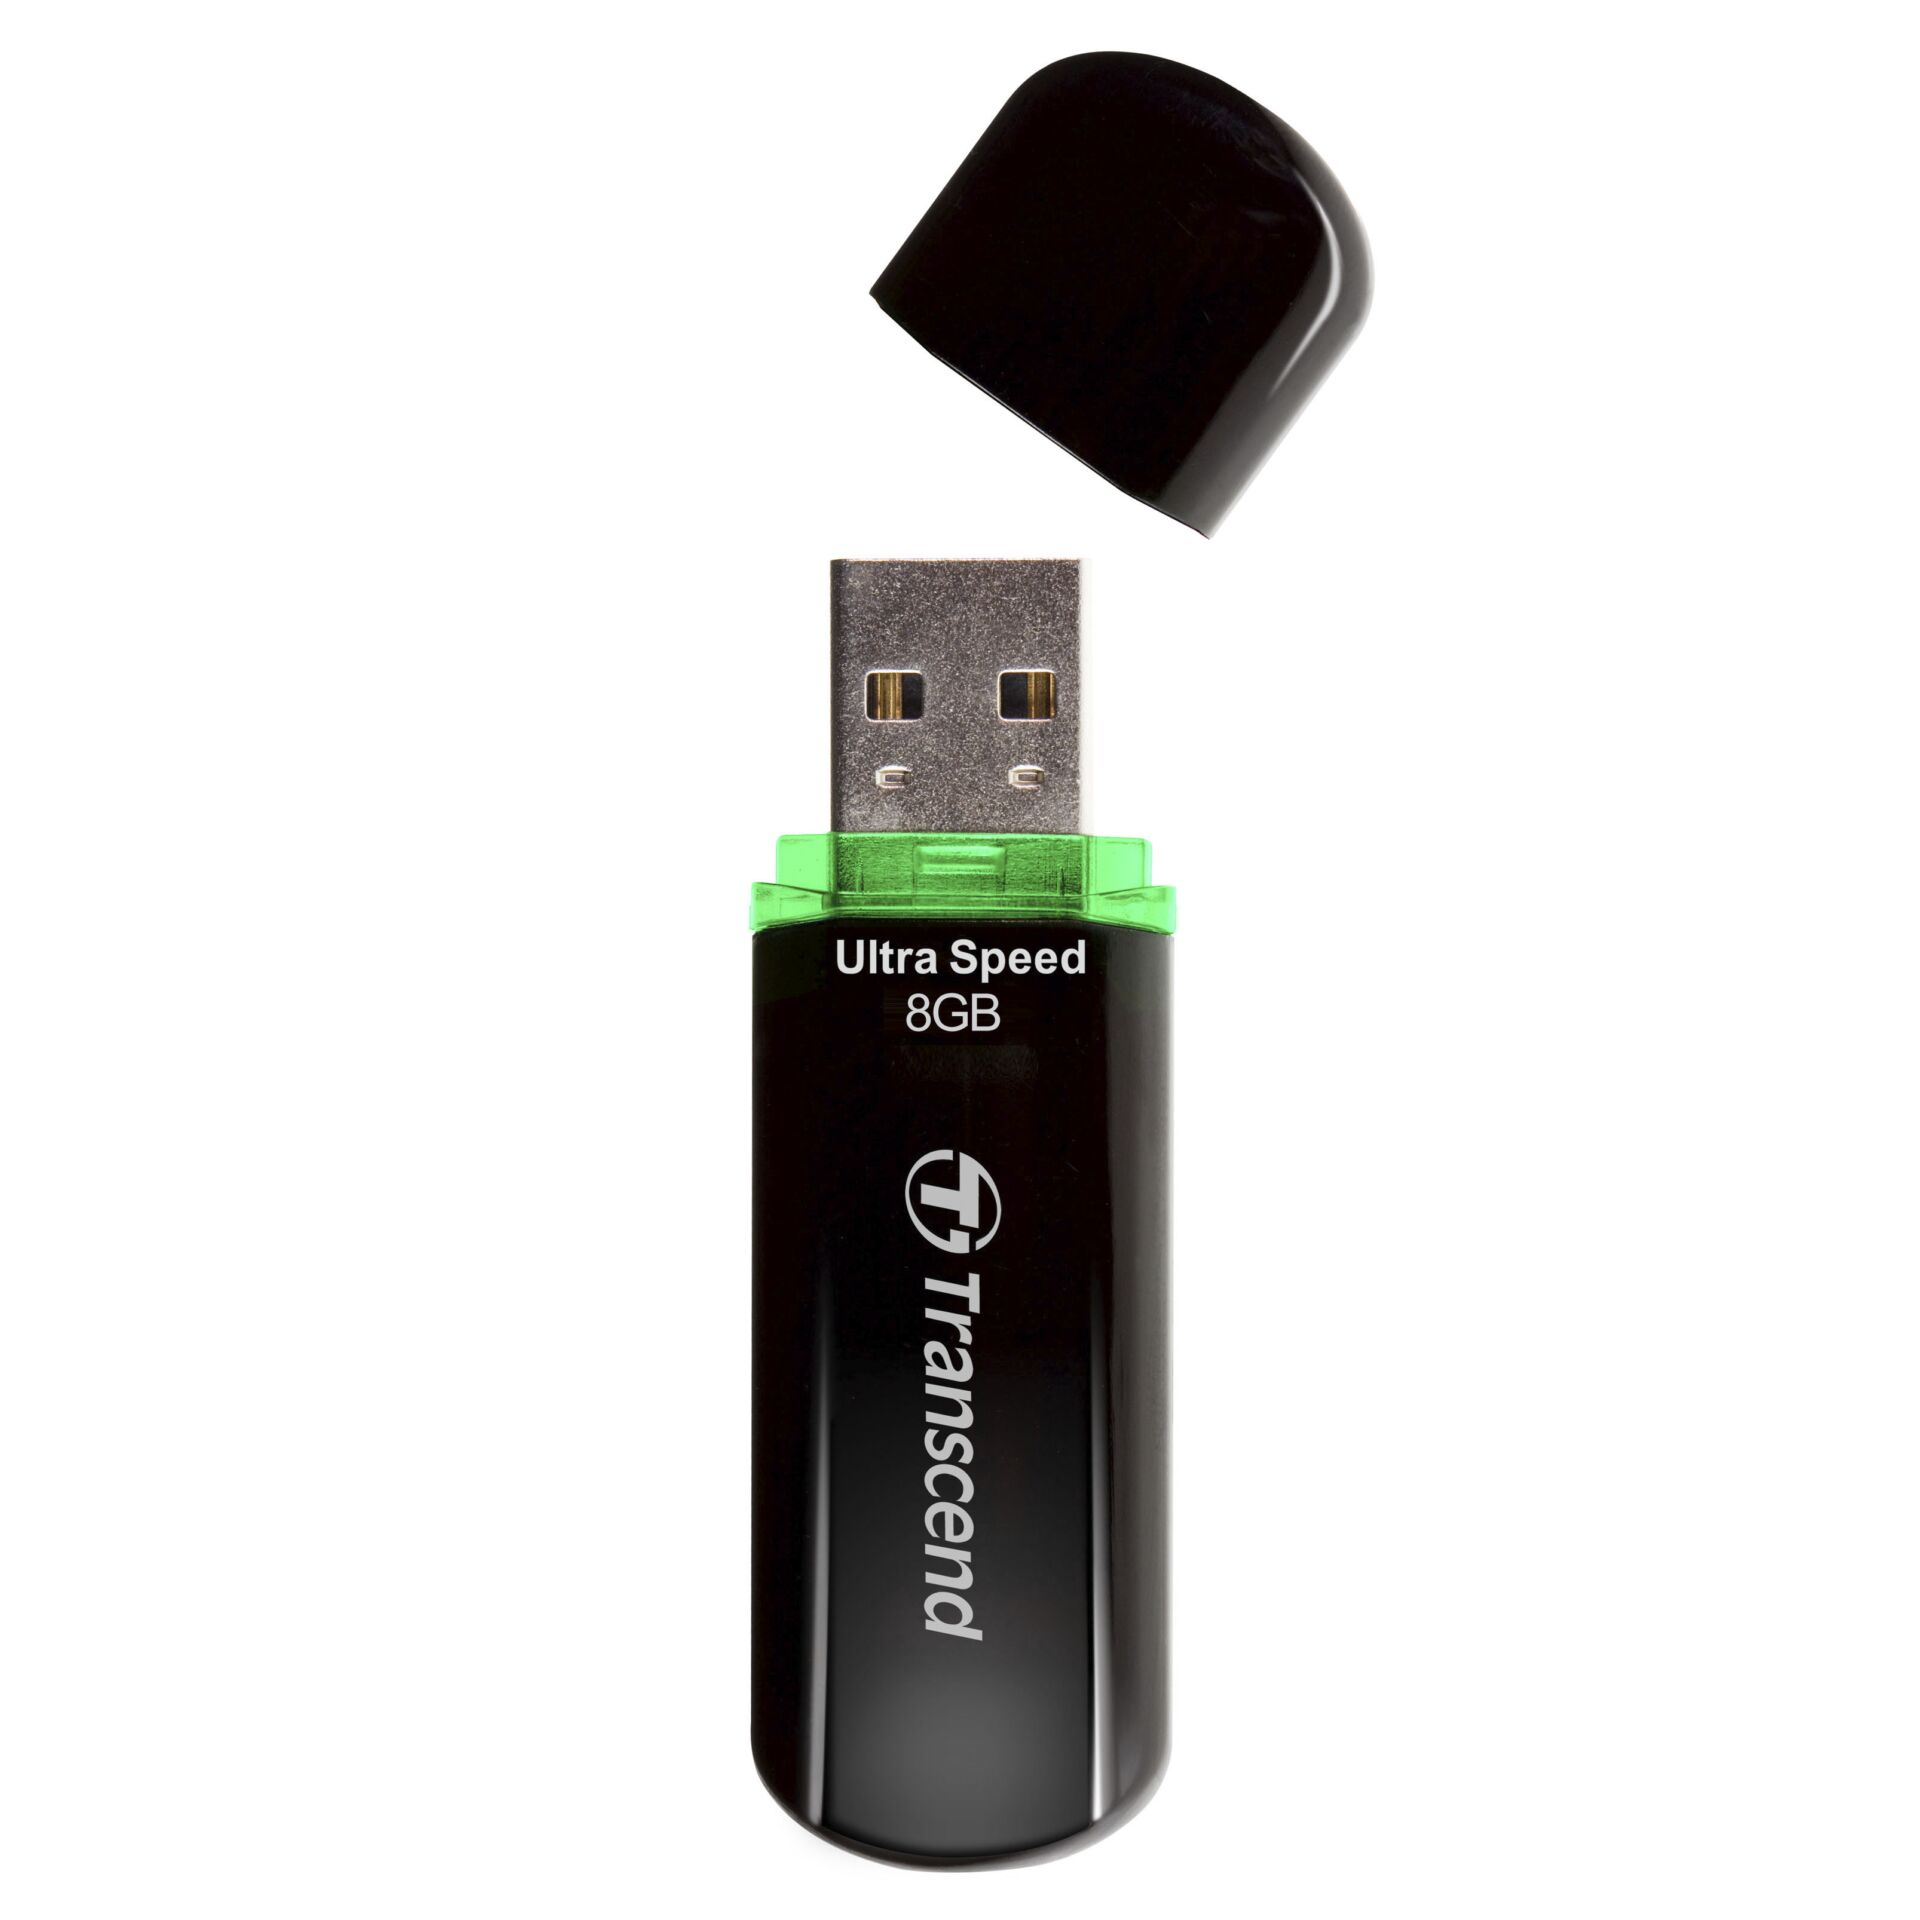 8 GB Transcend JetFlash 600 USB 2.0 Stick Lesen: 32MB/s, Schreiben: 12MB/s